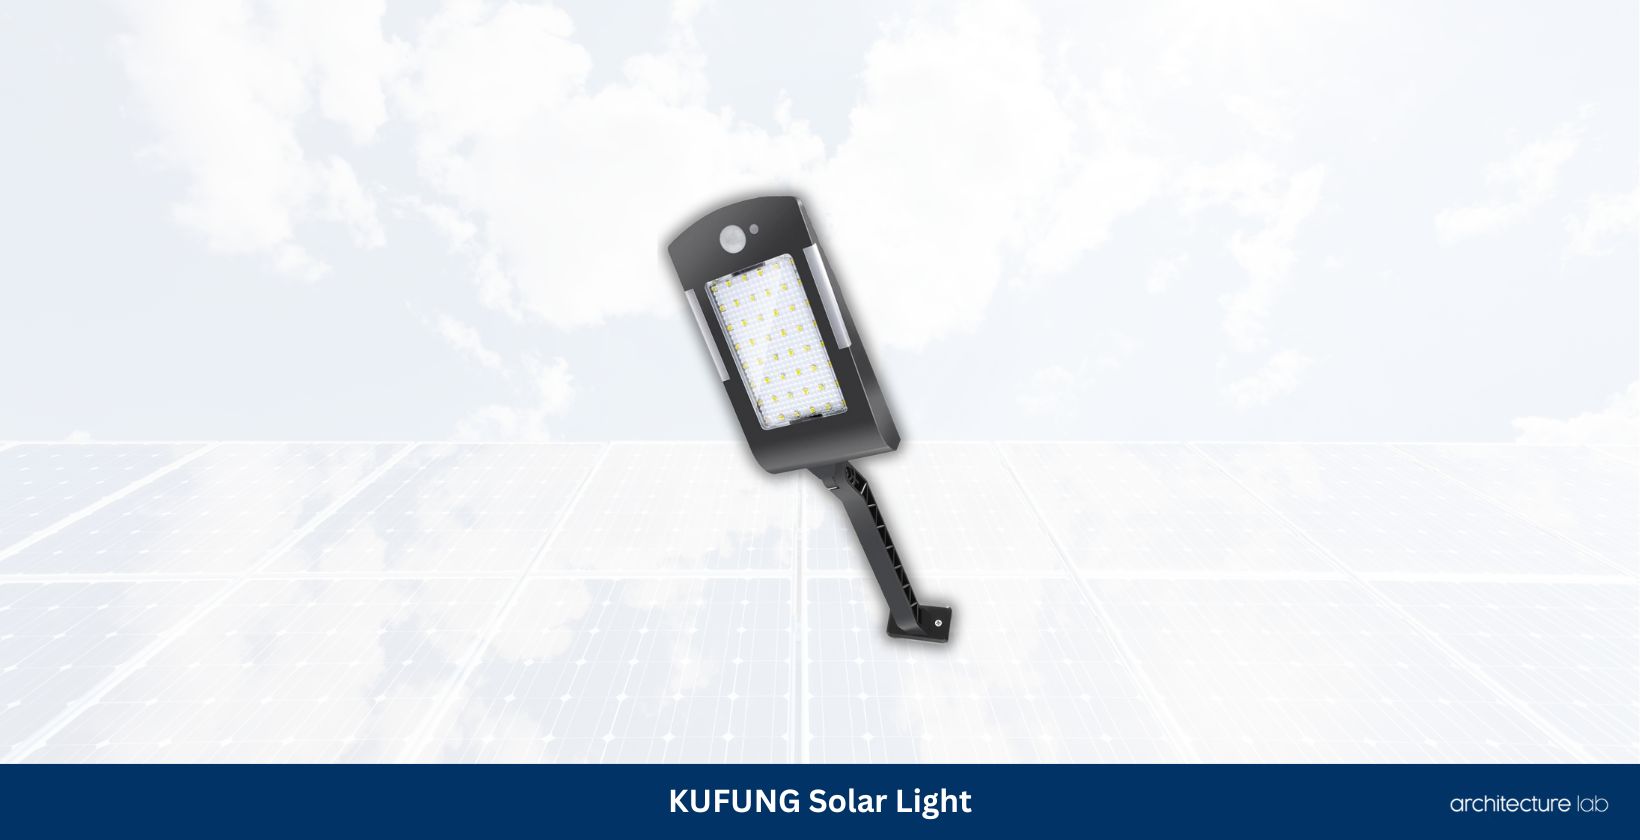 Kufung solar light